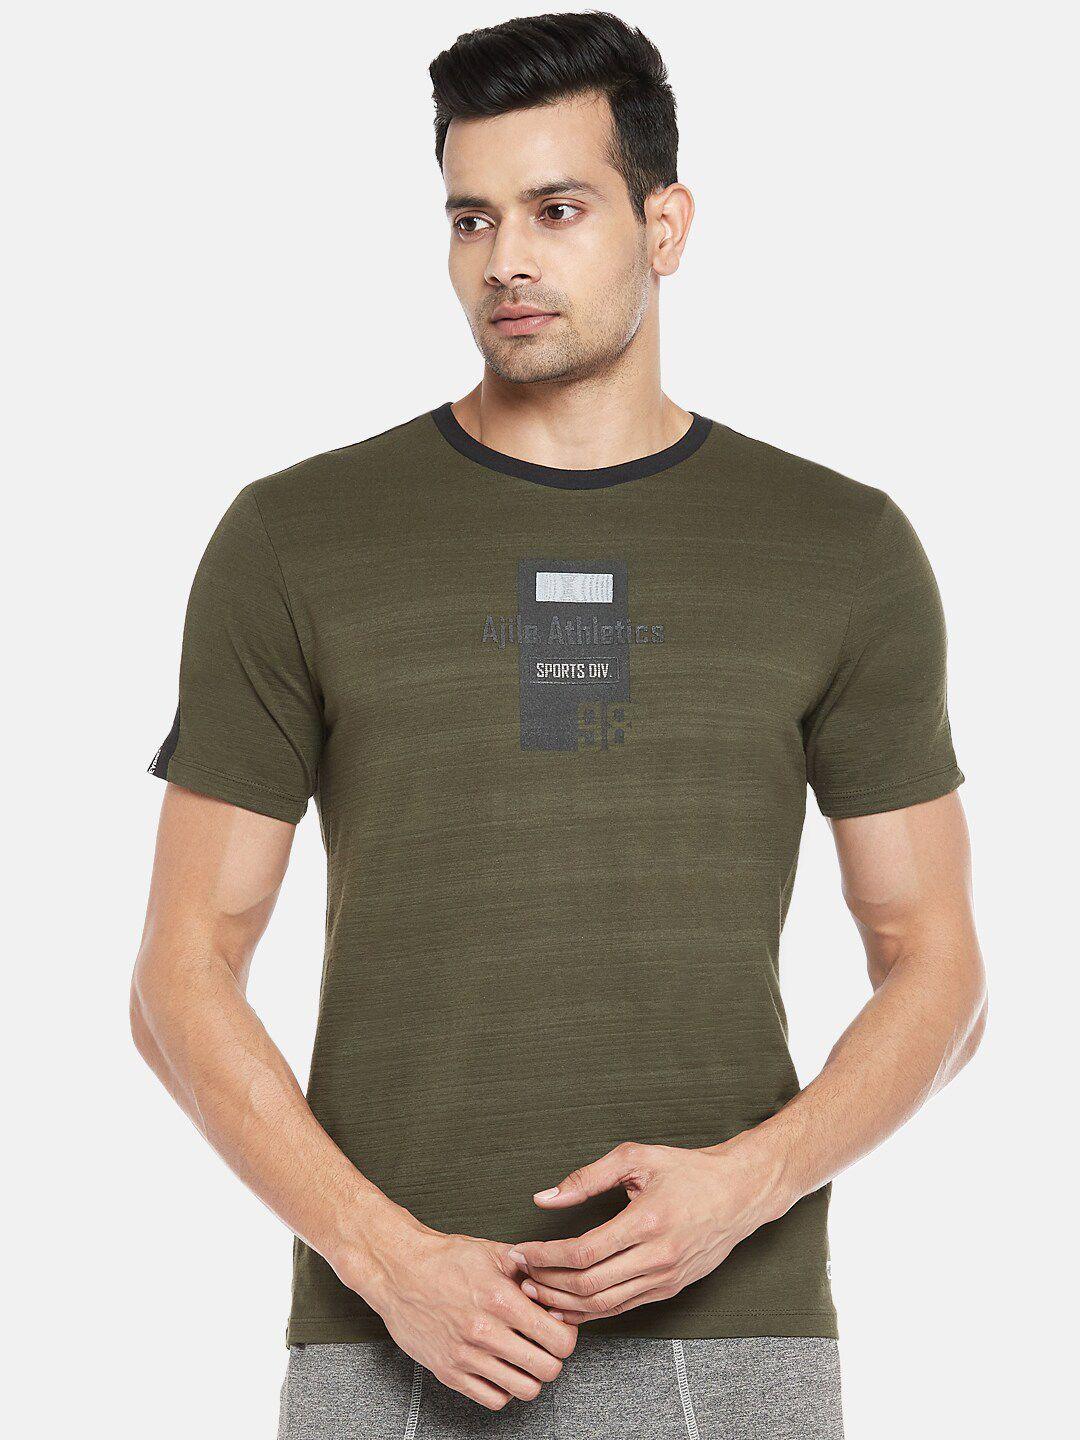 ajile by pantaloons men olive & grey graphic printed slim fit t-shirt